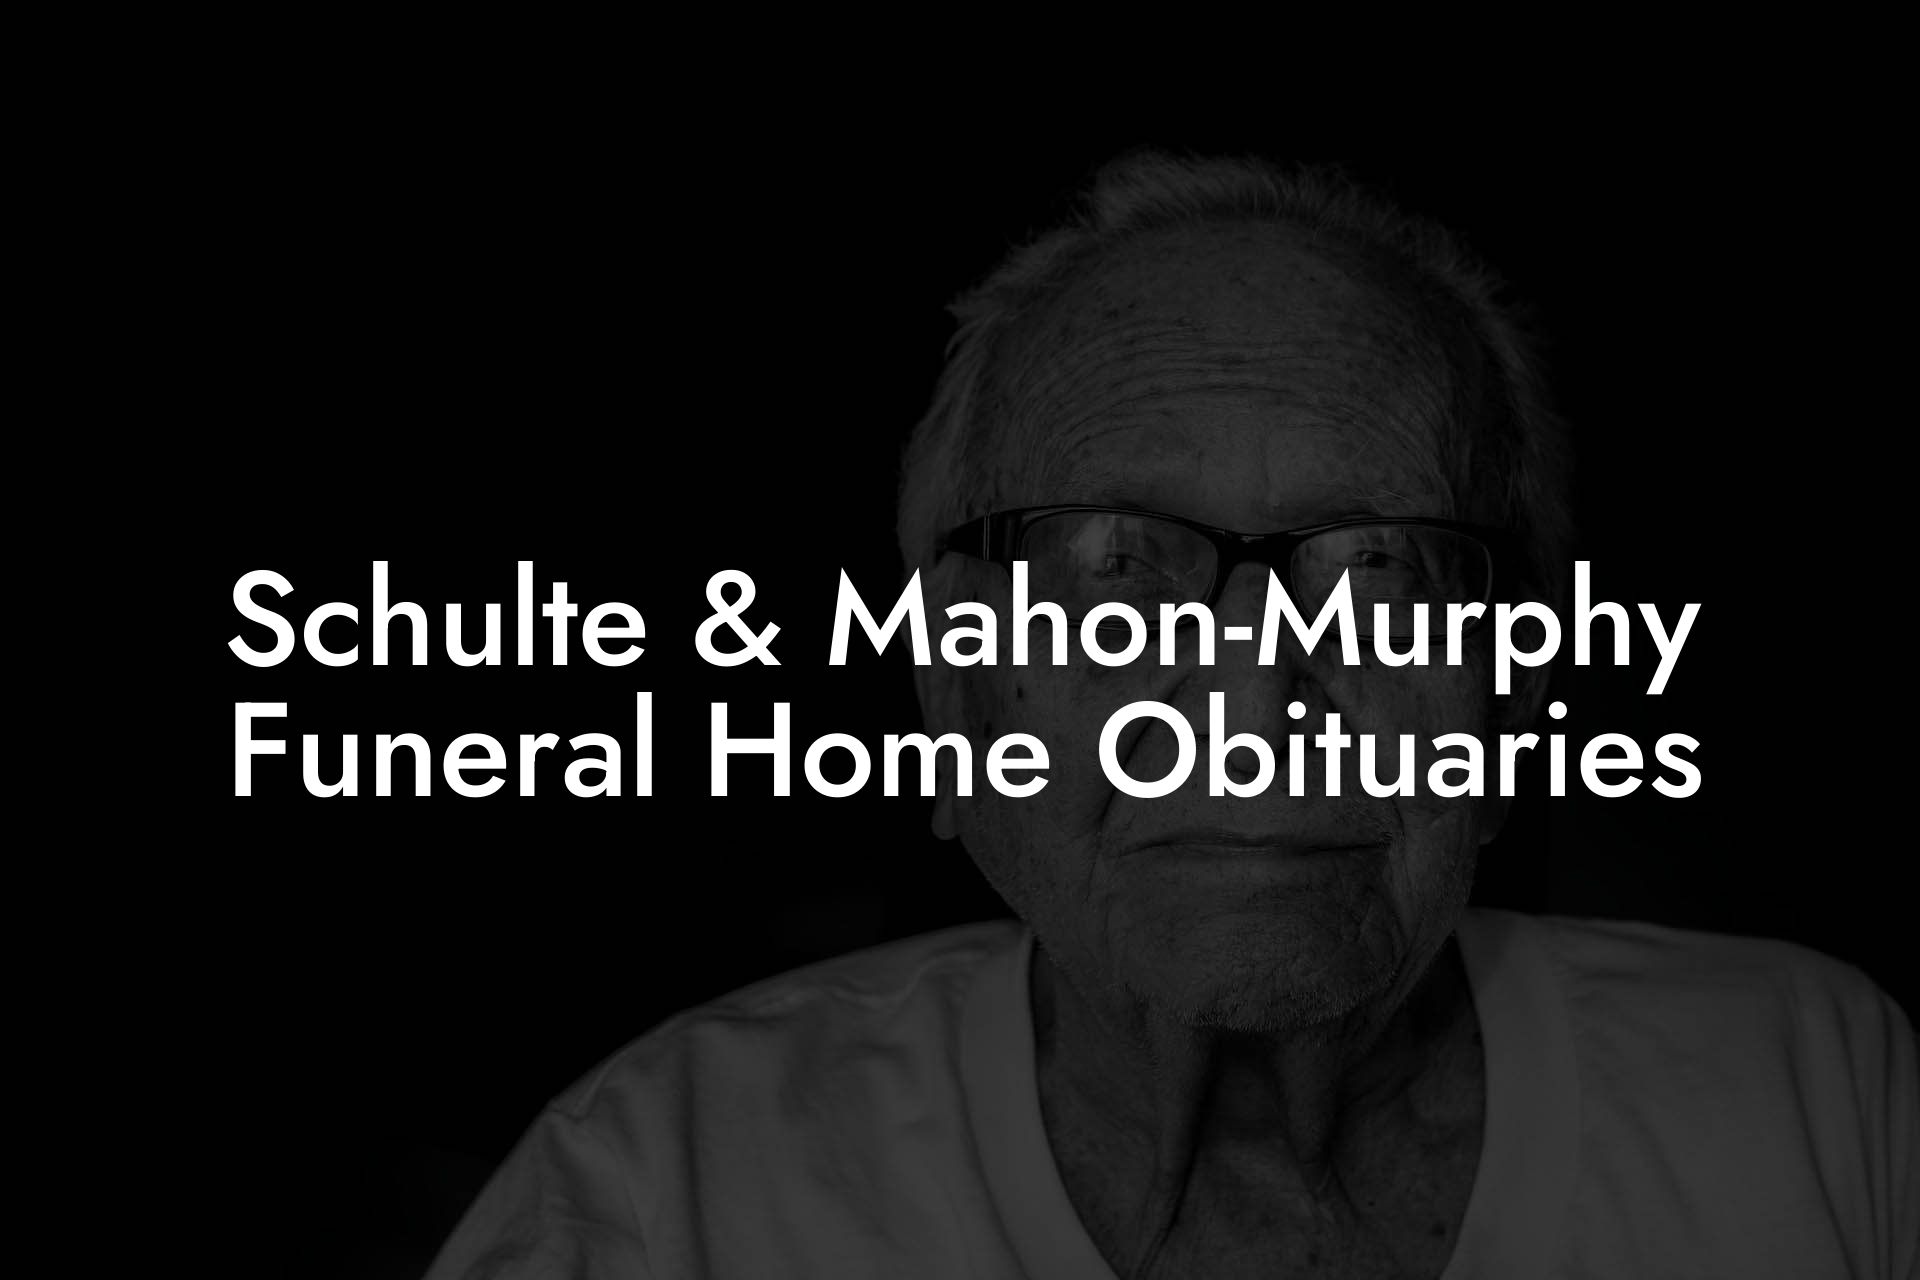 Schulte & Mahon-Murphy Funeral Home Obituaries